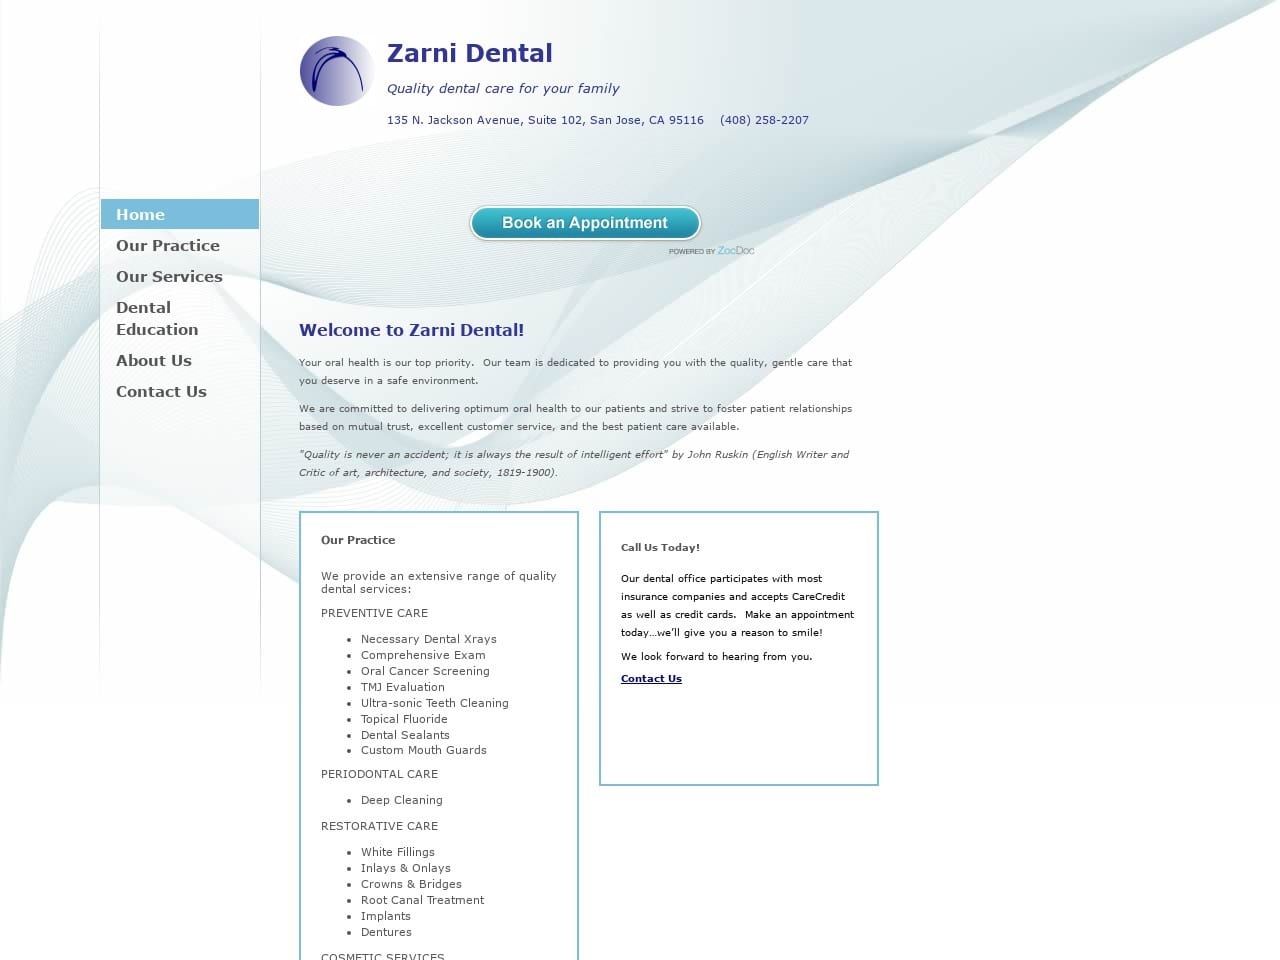 Zarni Dental Website Screenshot from zarnidental.com